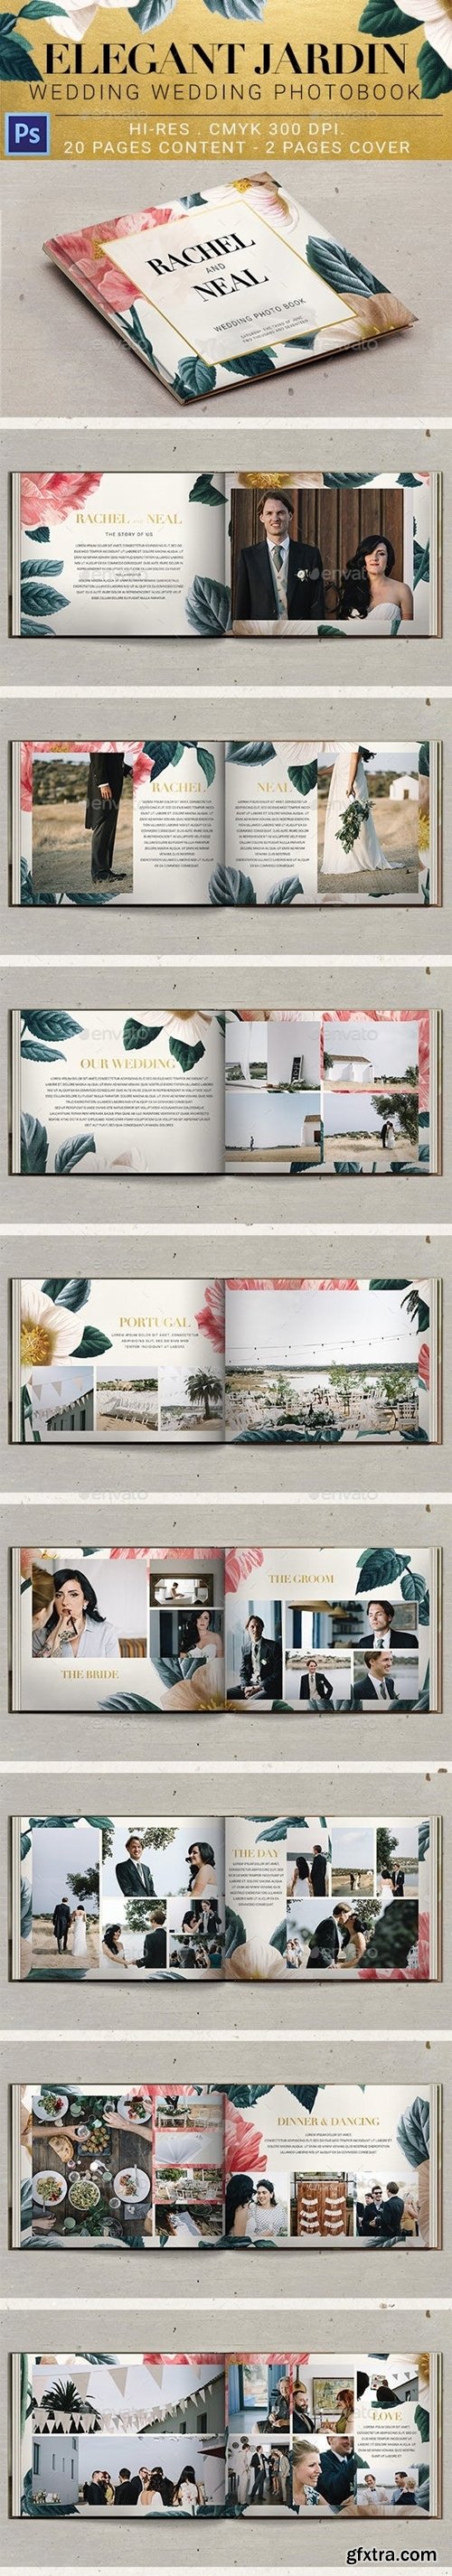 Graphicriver - Elegant Jardin Wedding Photobook 16014412